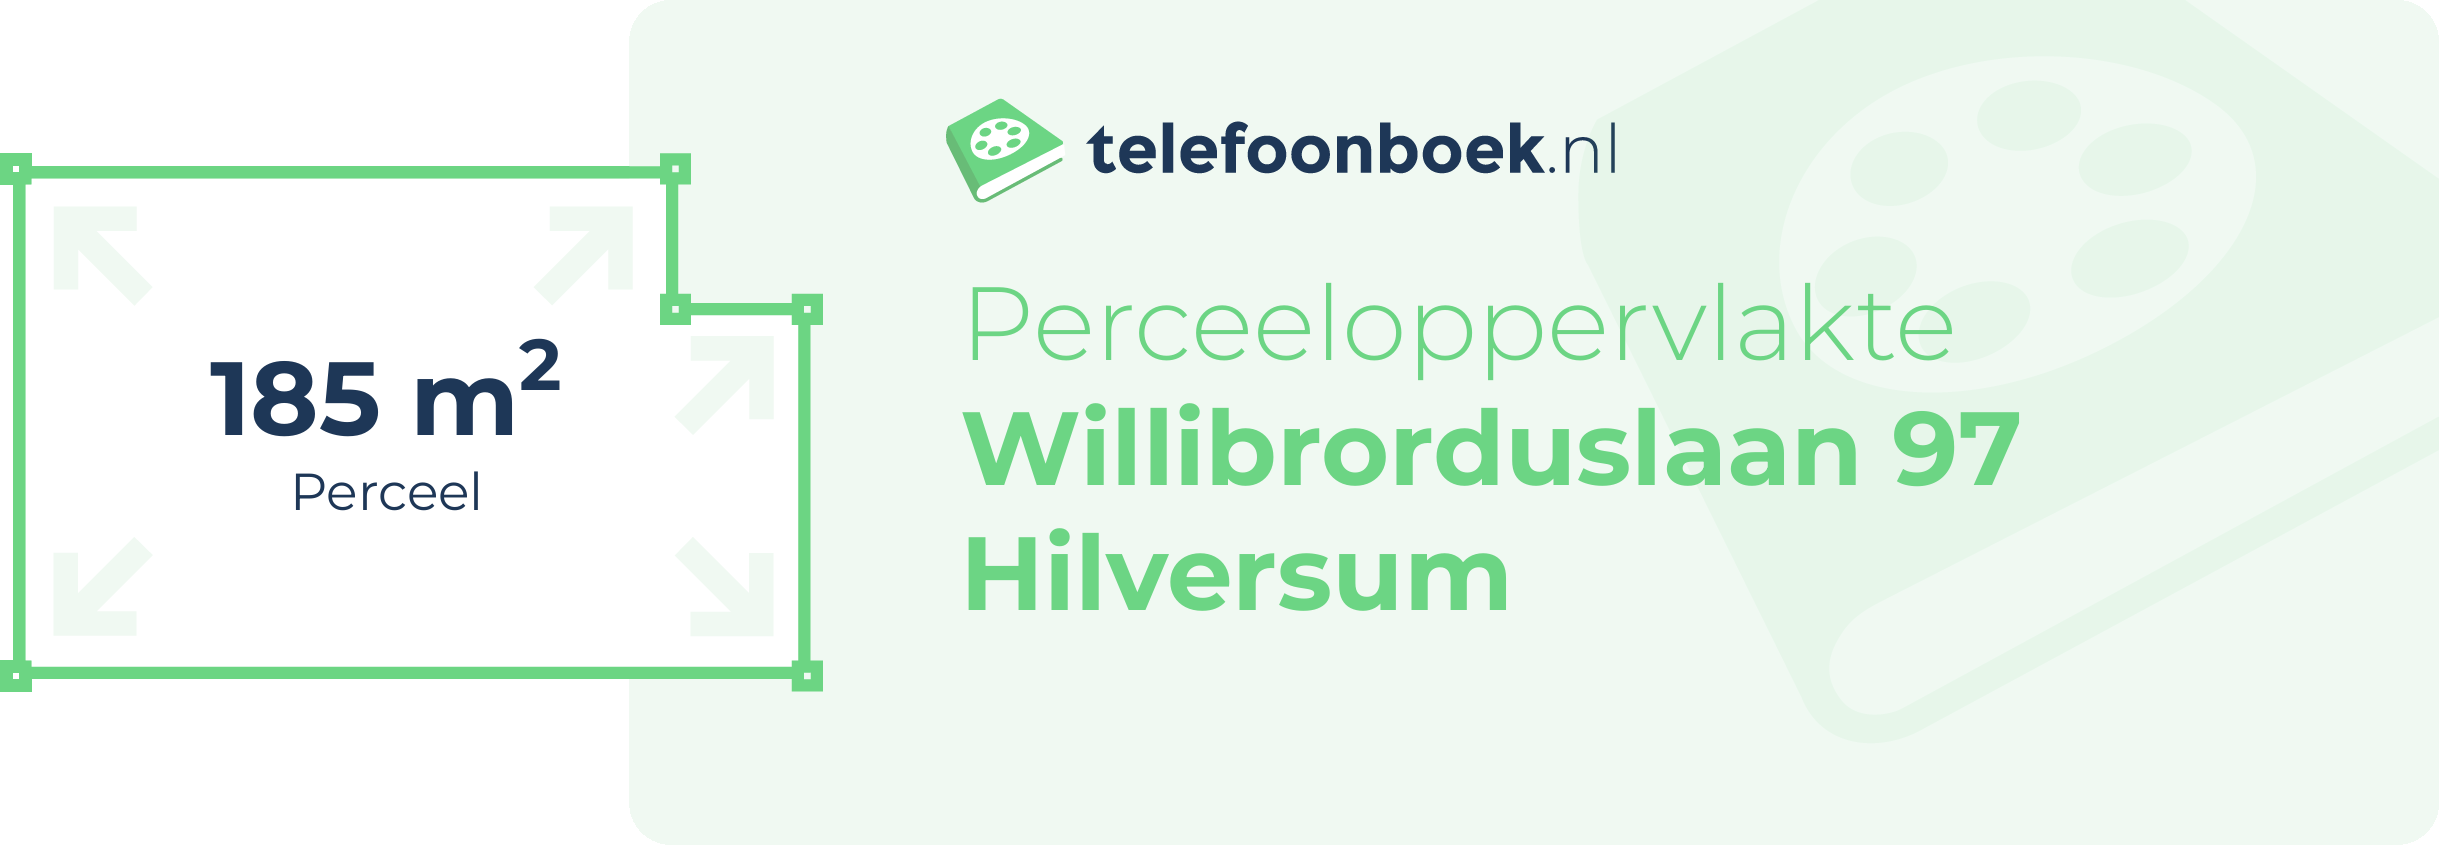 Perceeloppervlakte Willibrorduslaan 97 Hilversum